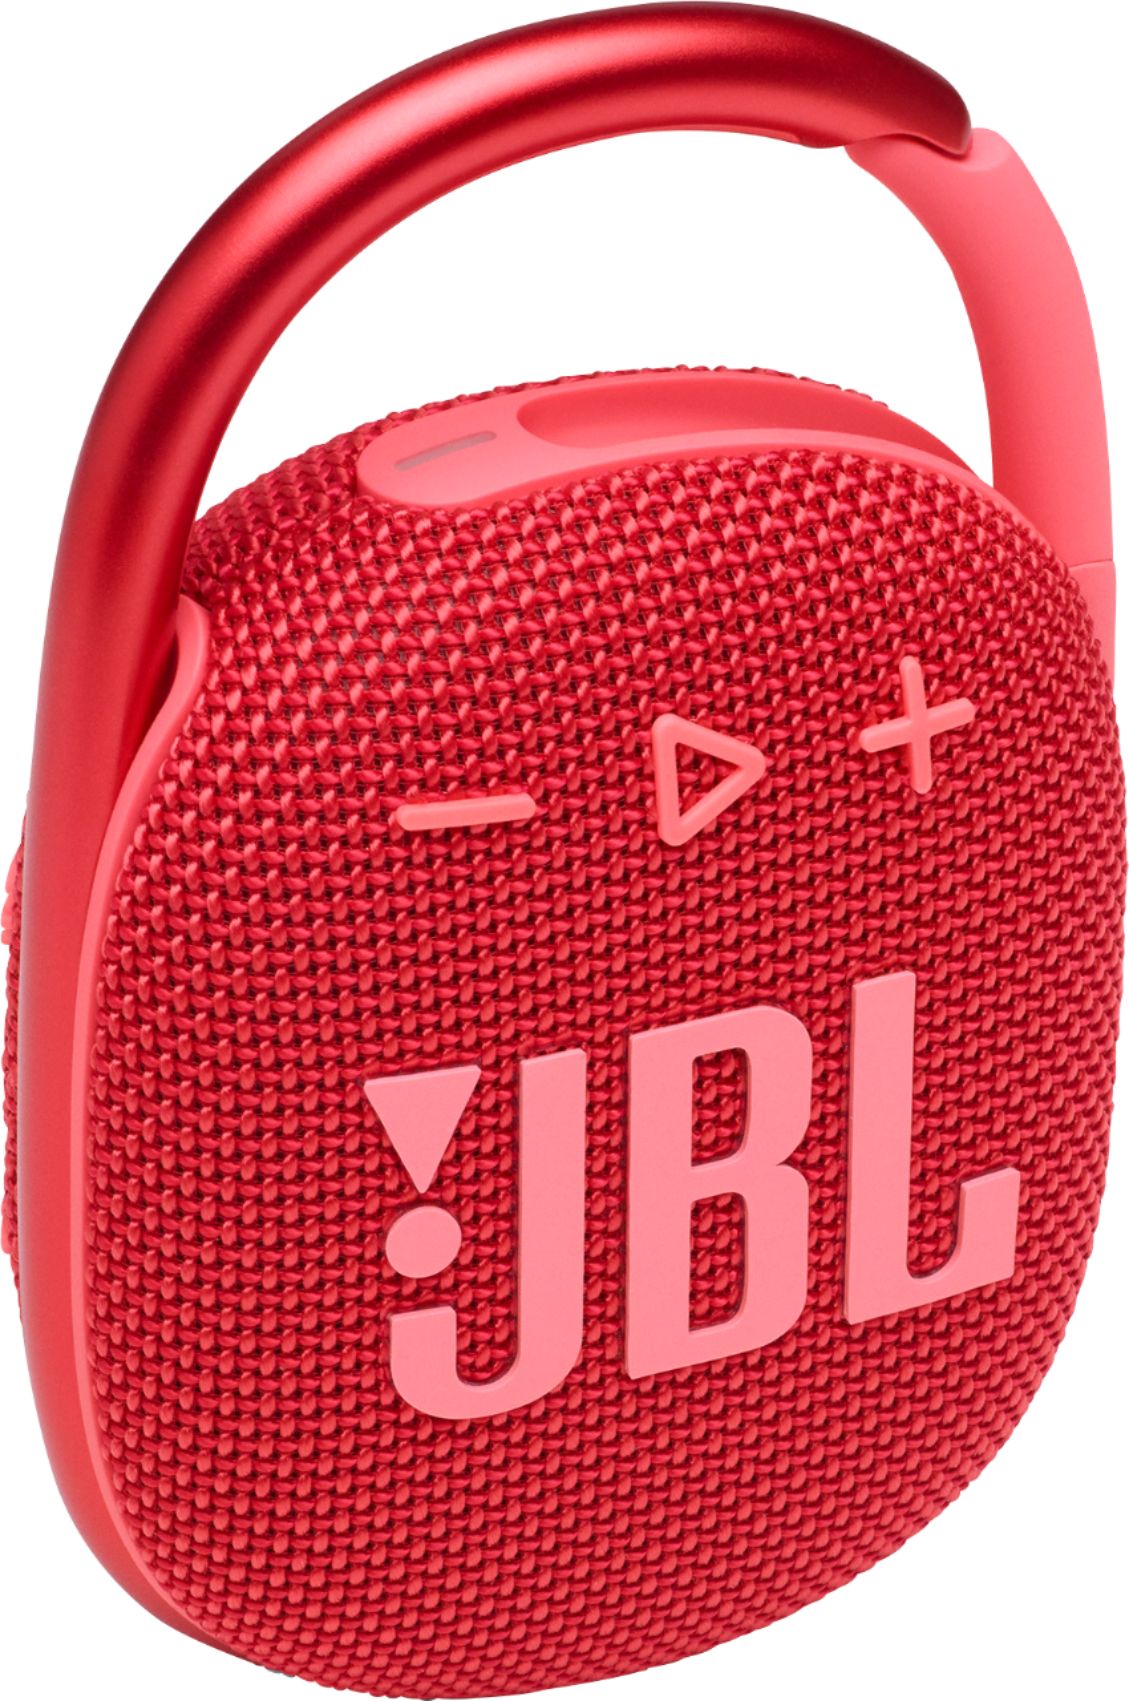 JBL Clip4 Portable Bluetooth Speaker Review